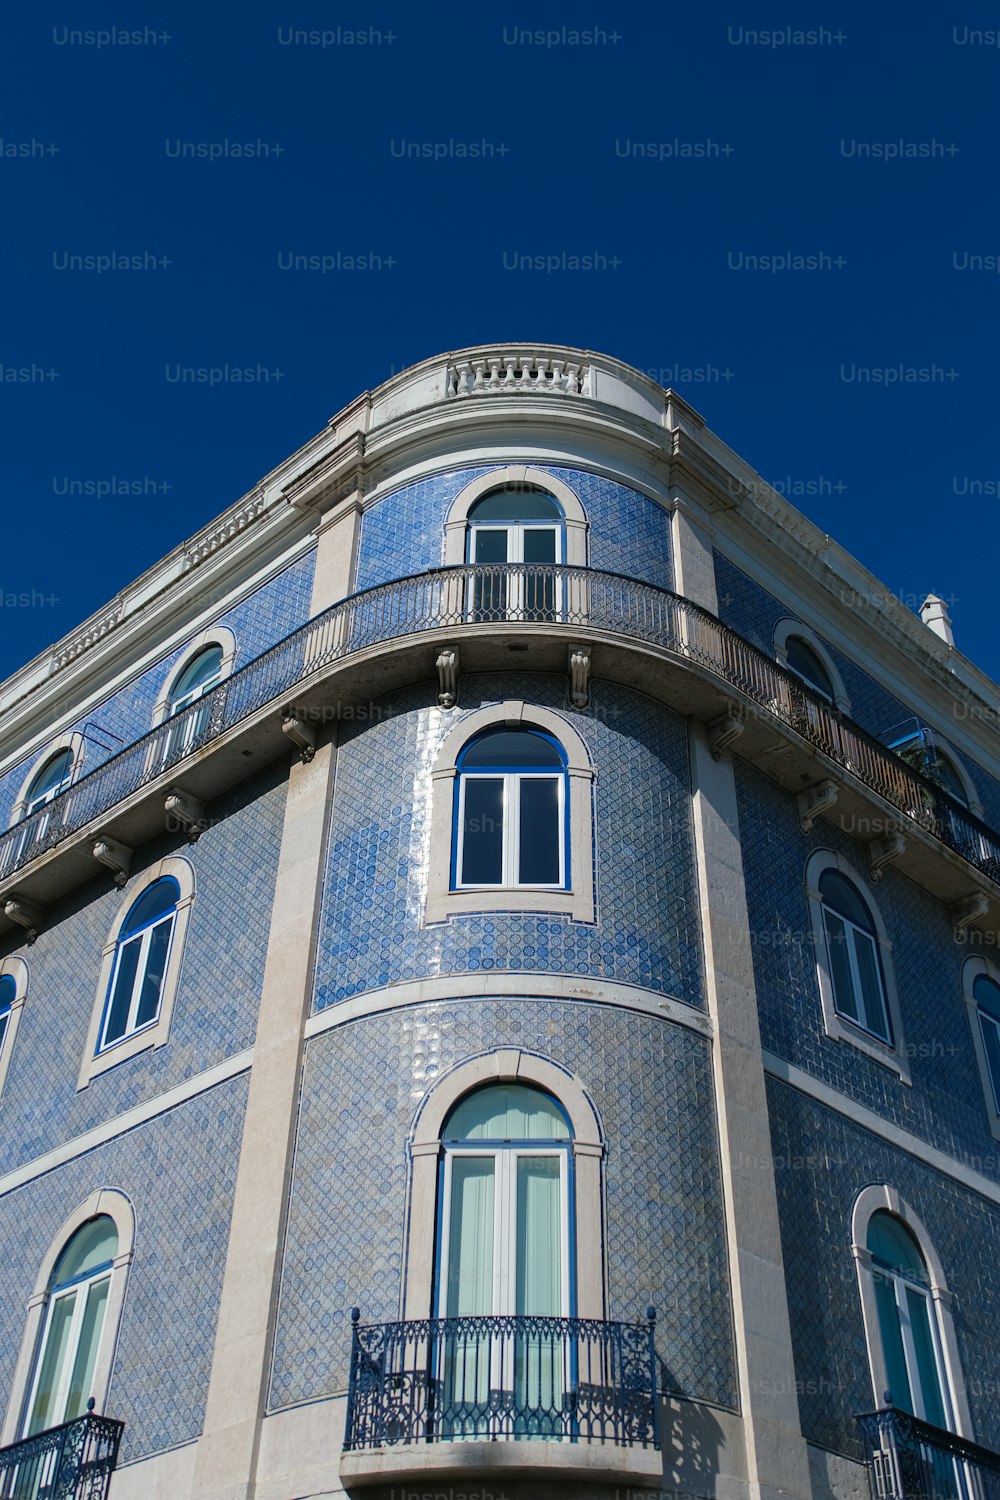 Un edificio azul con balcón y balcones